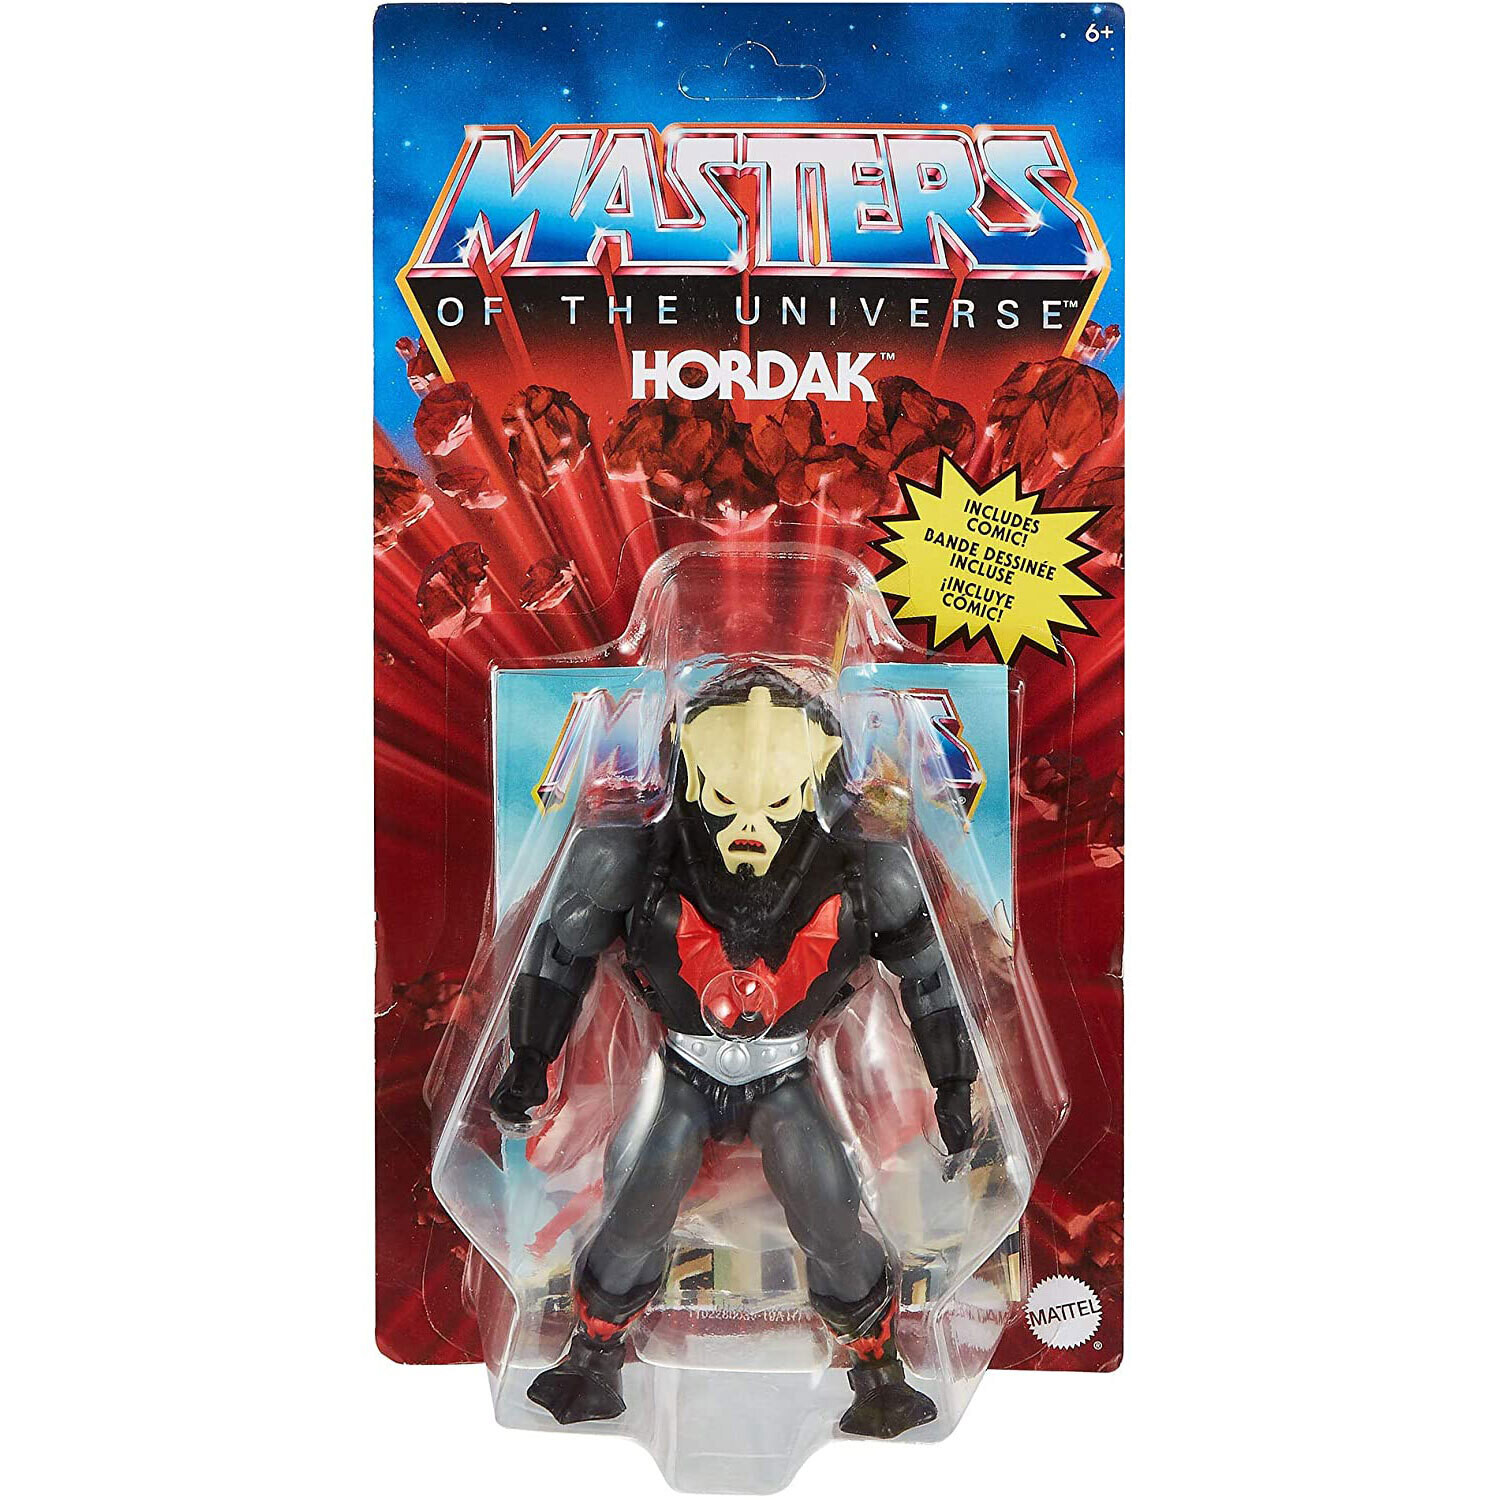 Masters of the Universe Origins Hordak14 cm
Action figure